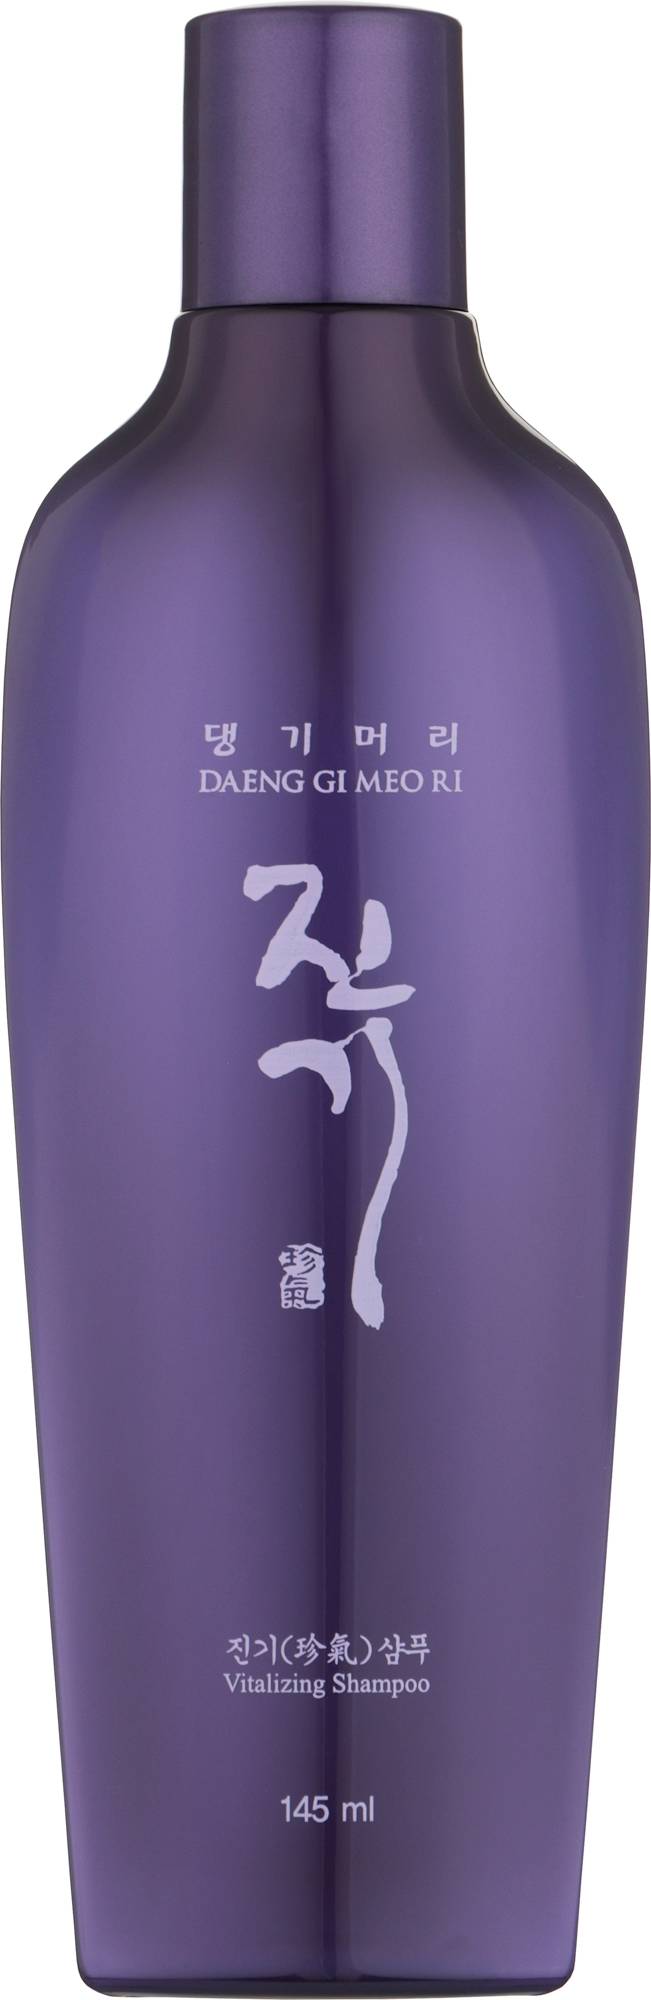 Восстанавливающий шампунь для ослабленных волос Daeng Gi Meo Ri Vitalizing Shampoo, 145 мл